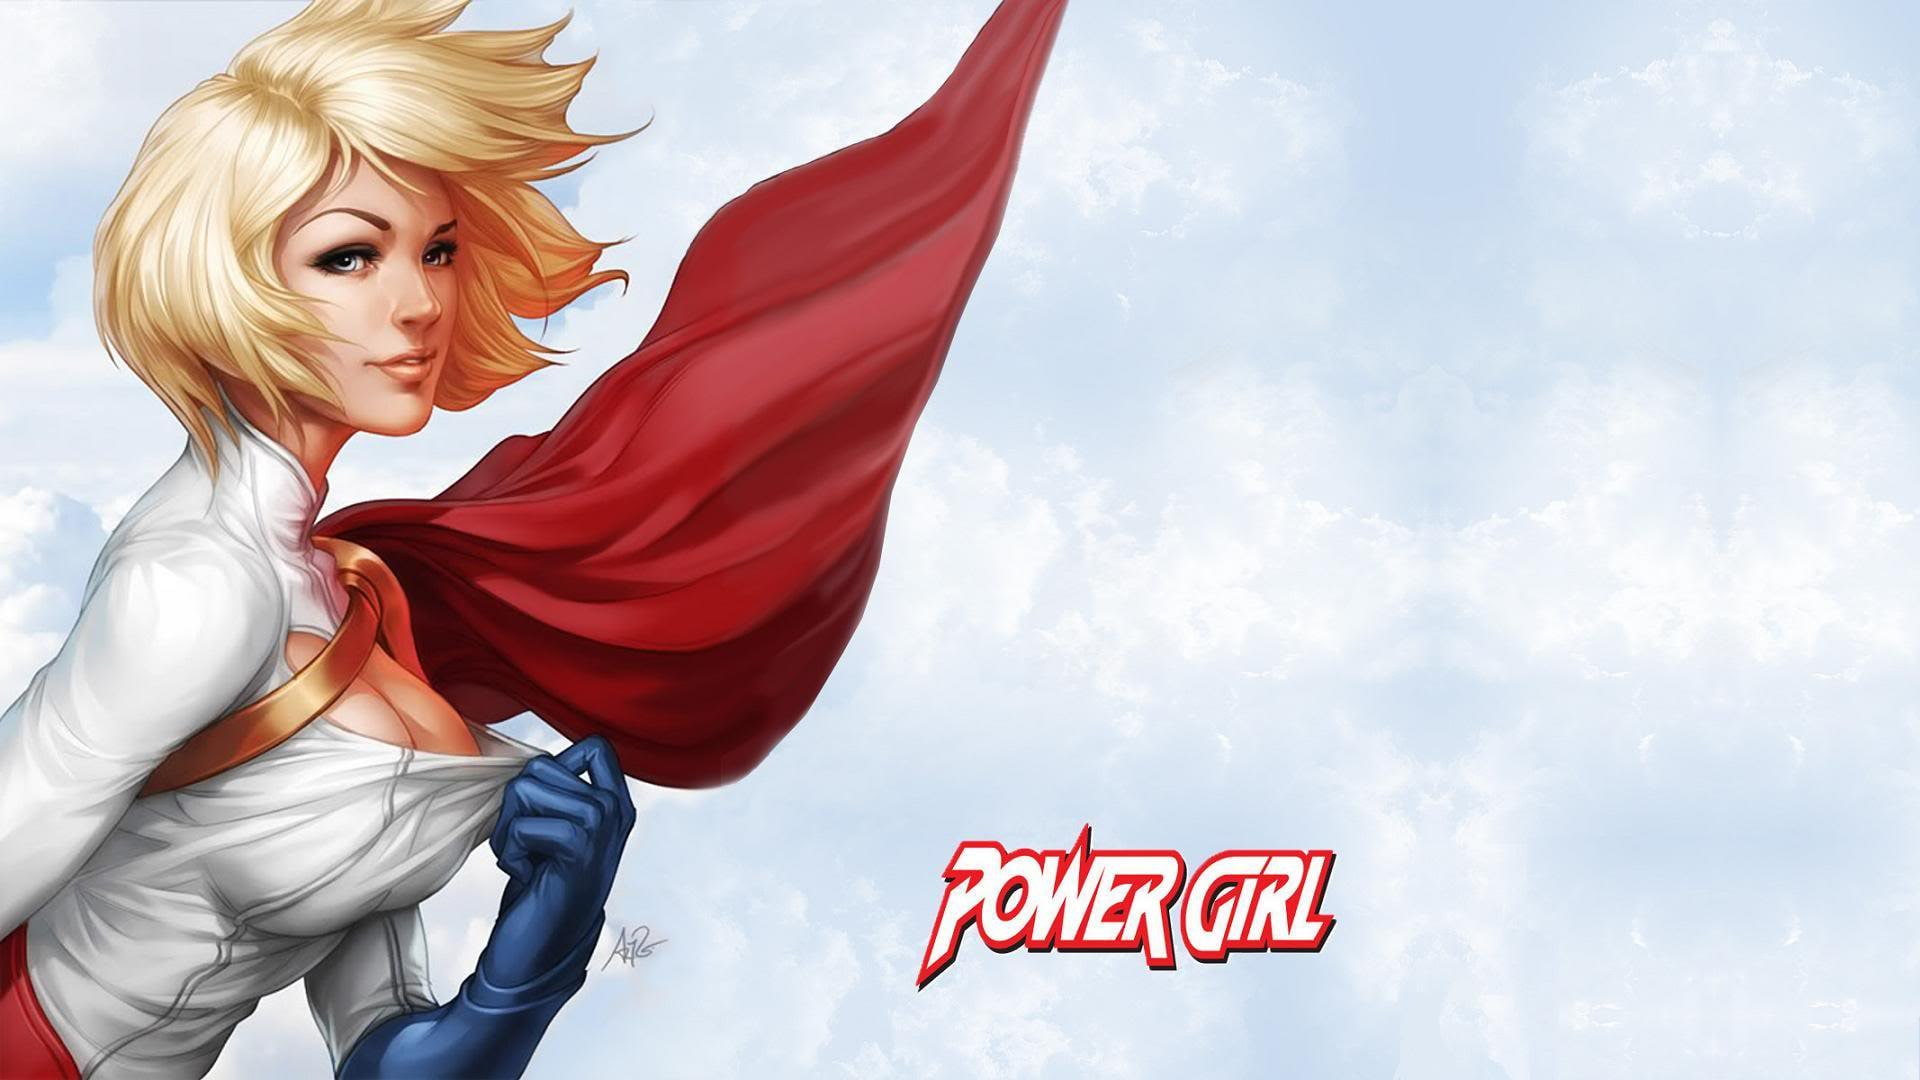 Wallpaper id p powergirl injustice injustice free download